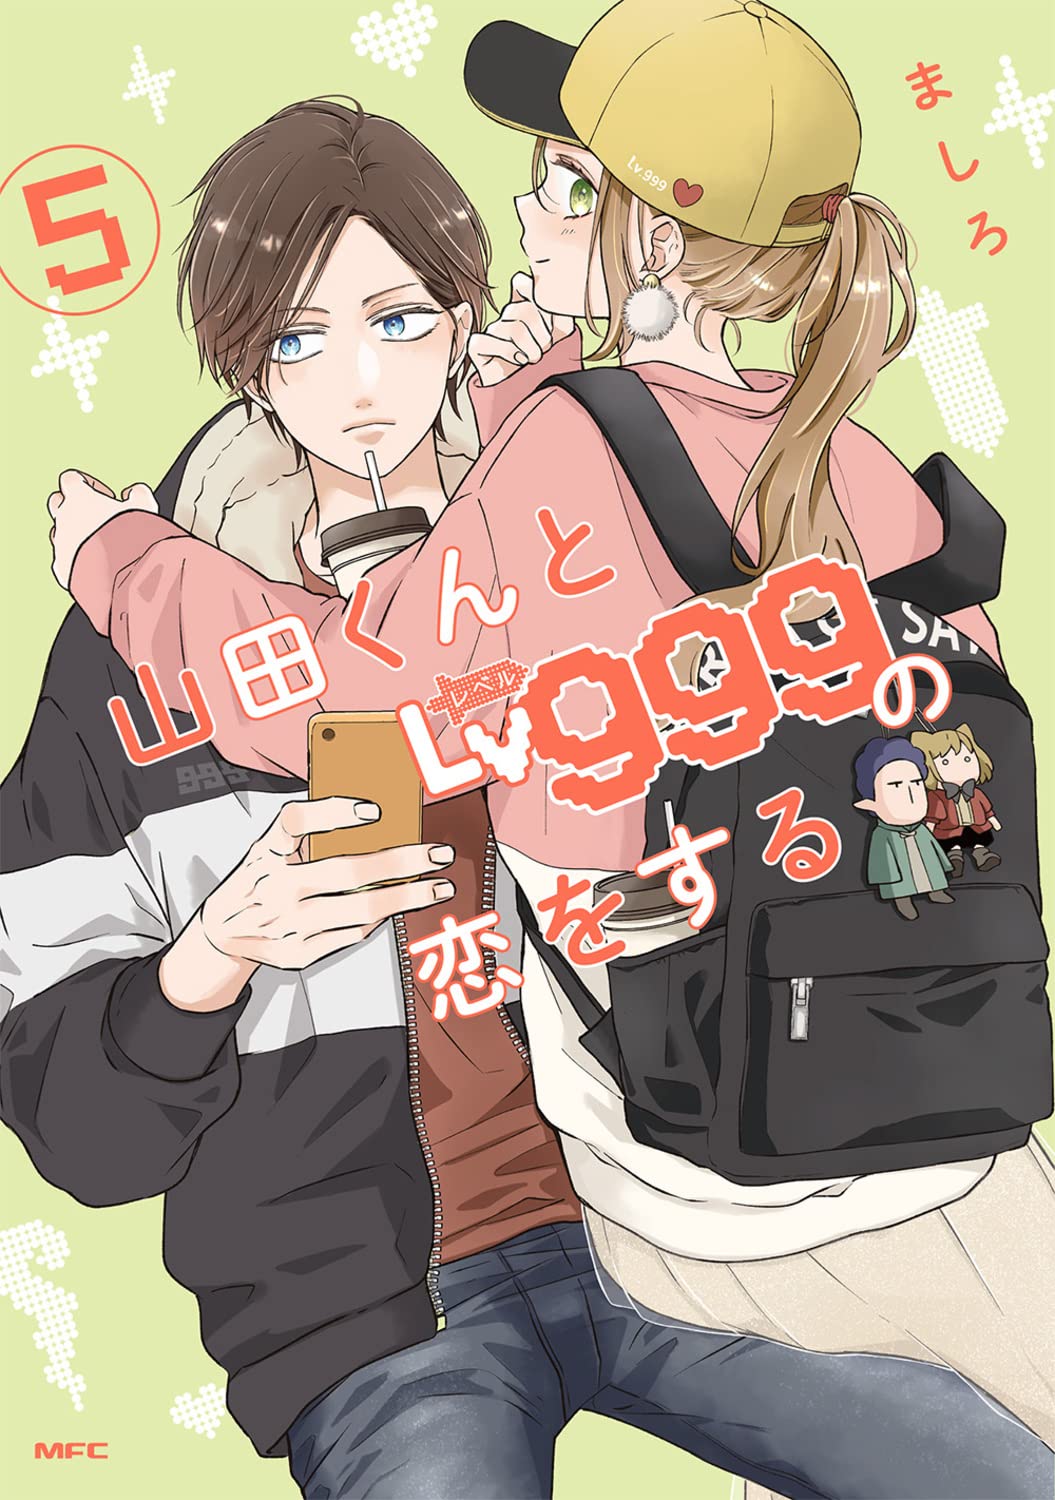 My Love Story with Yamada-kun at Lv999 Volume 1 by Mashiro: 9781984862693 |  : Books